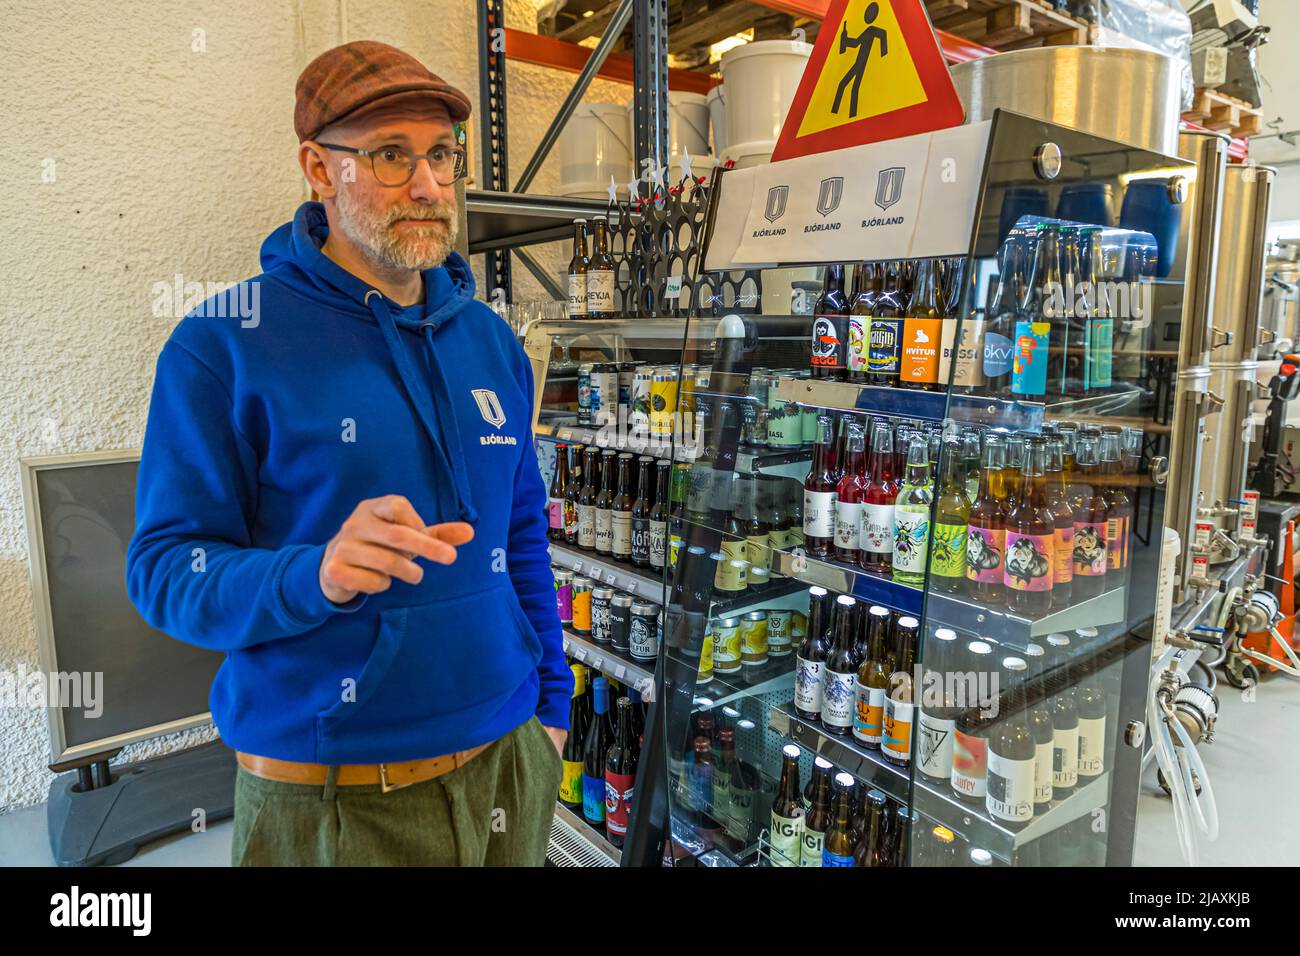 Þórgnýr Thoroddsen is a profound connoisseur of the Icelandic beer and brewing scene. Bjorland in Reykjavik, Iceland Stock Photo